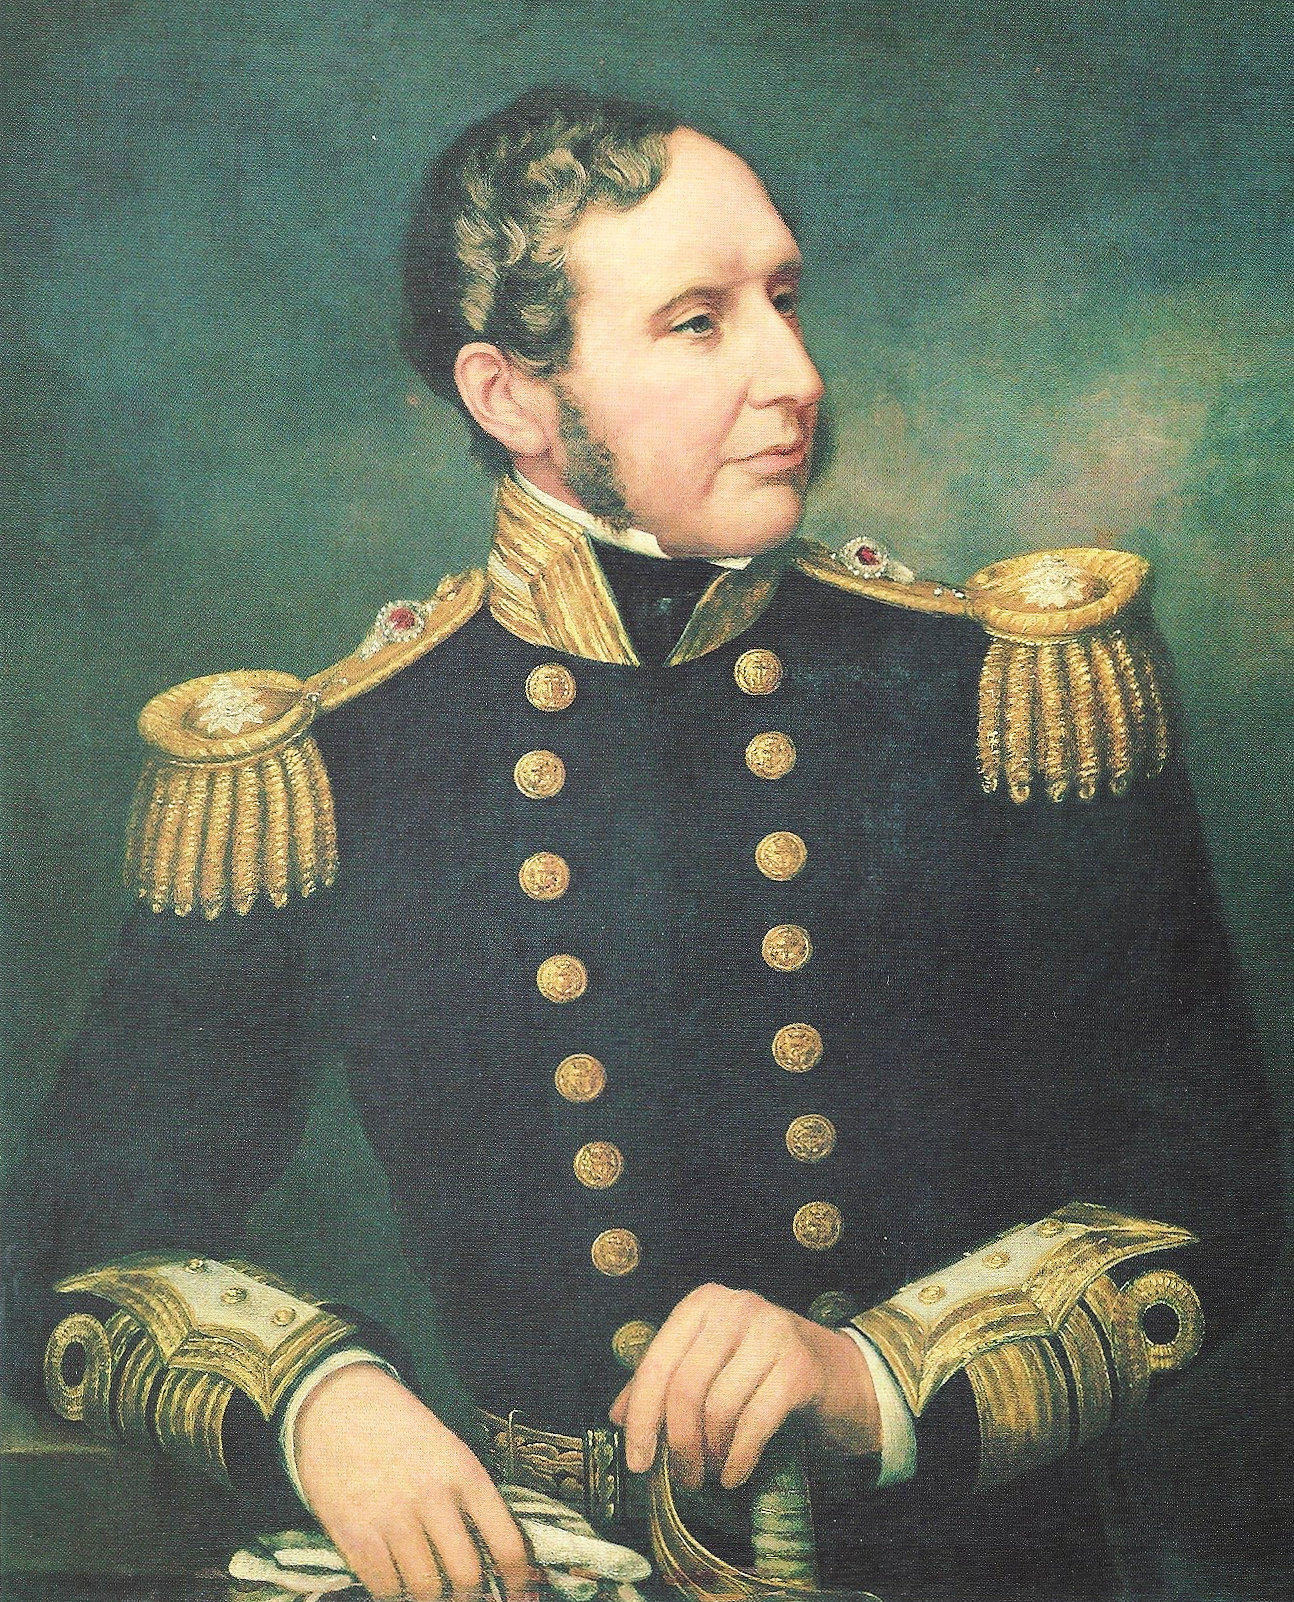 Admiral Robert FitzRoy